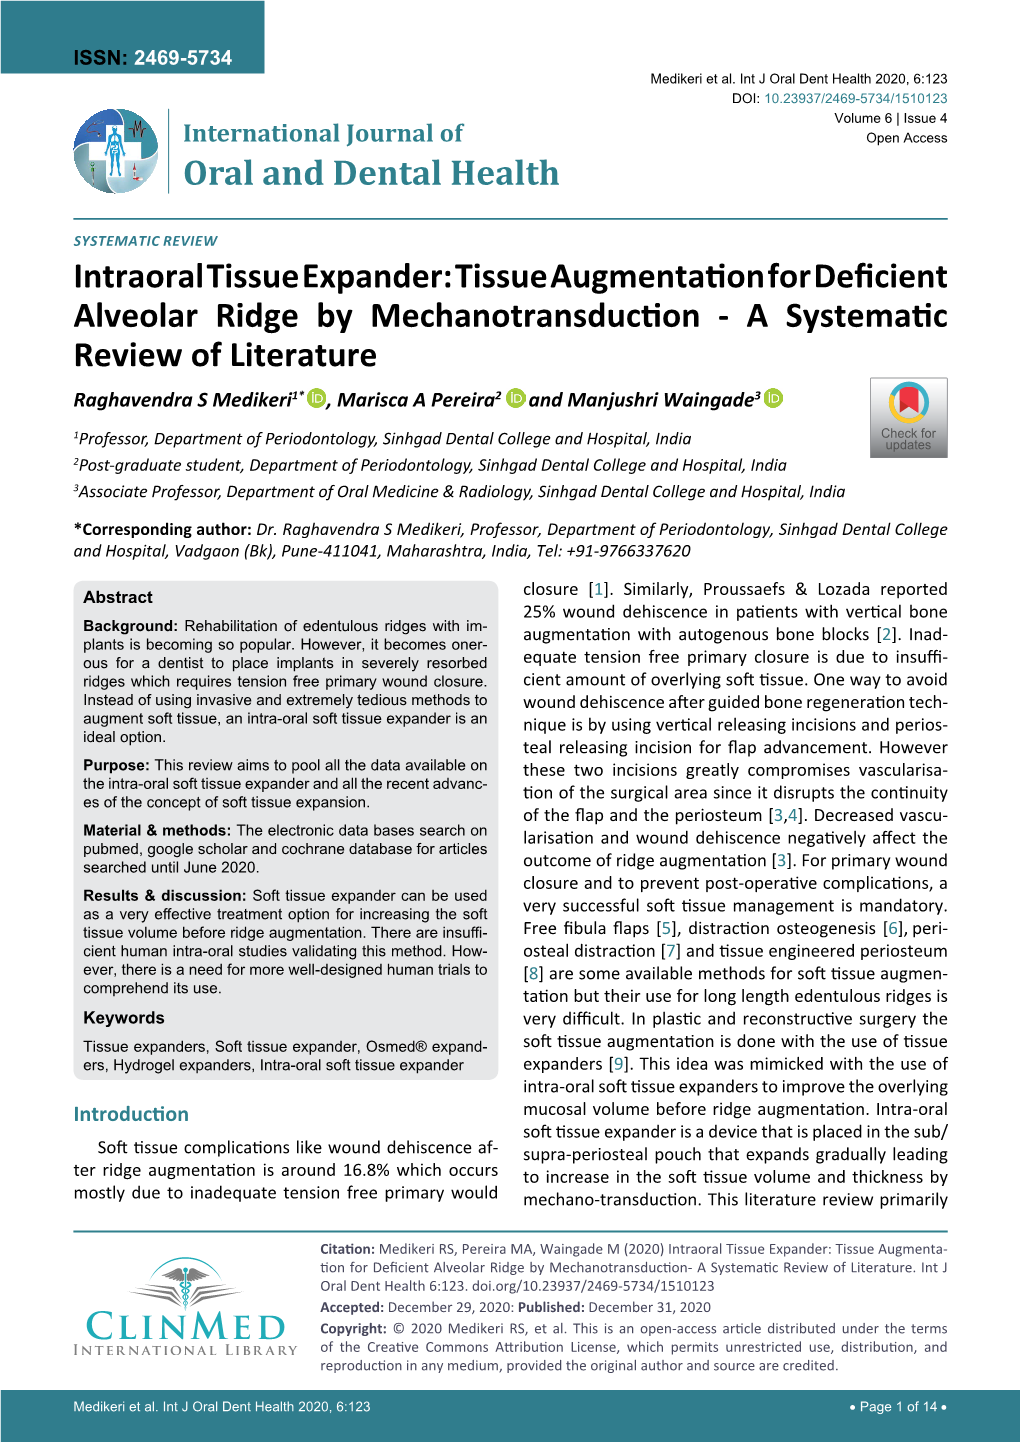 Intraoral Tissue Expander: Tissue Augmentation for Deficient Alveolar